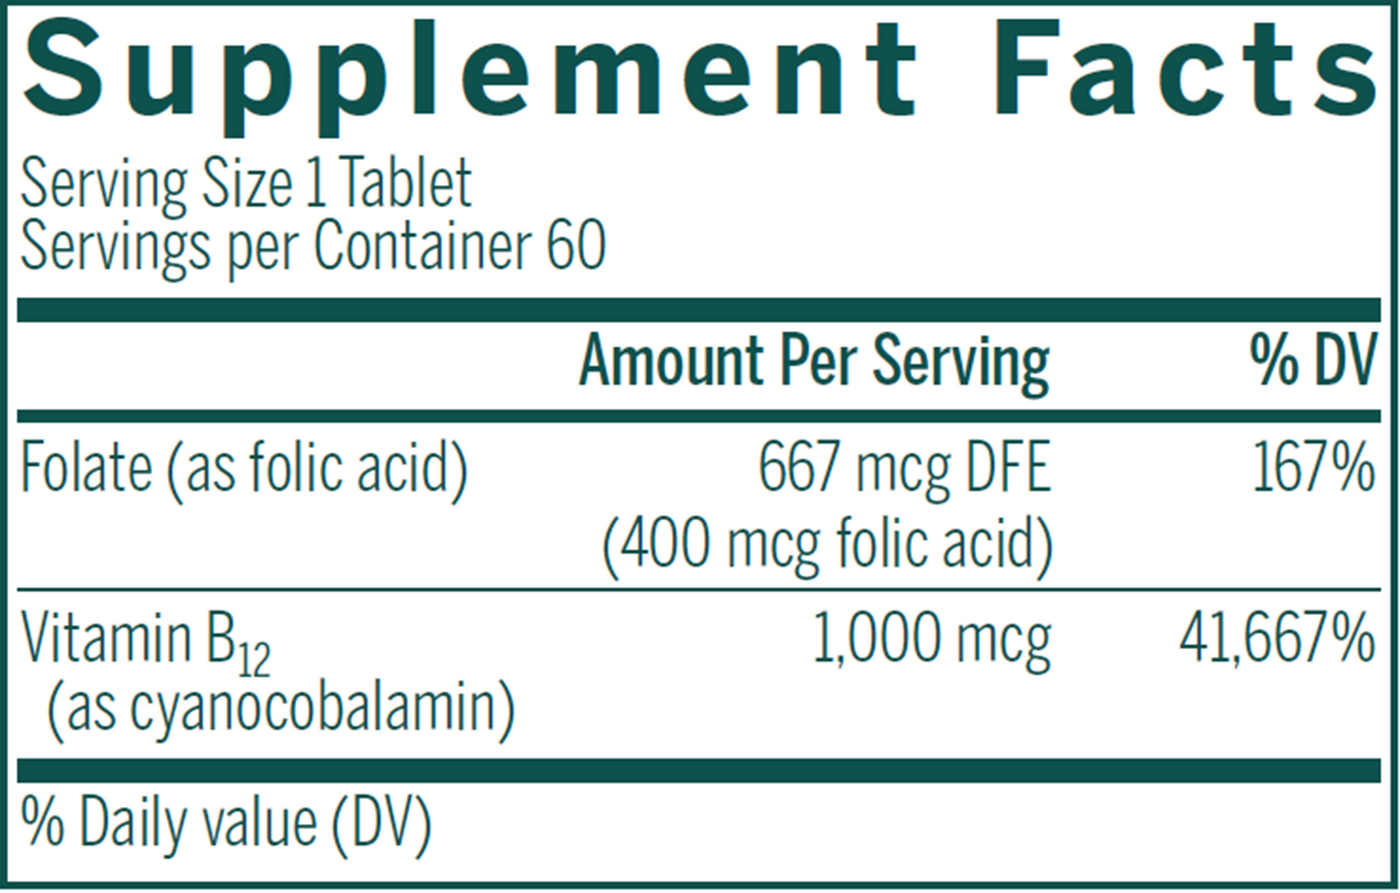 Bio B12 + Folic Acid (Chewable)  Curated Wellness